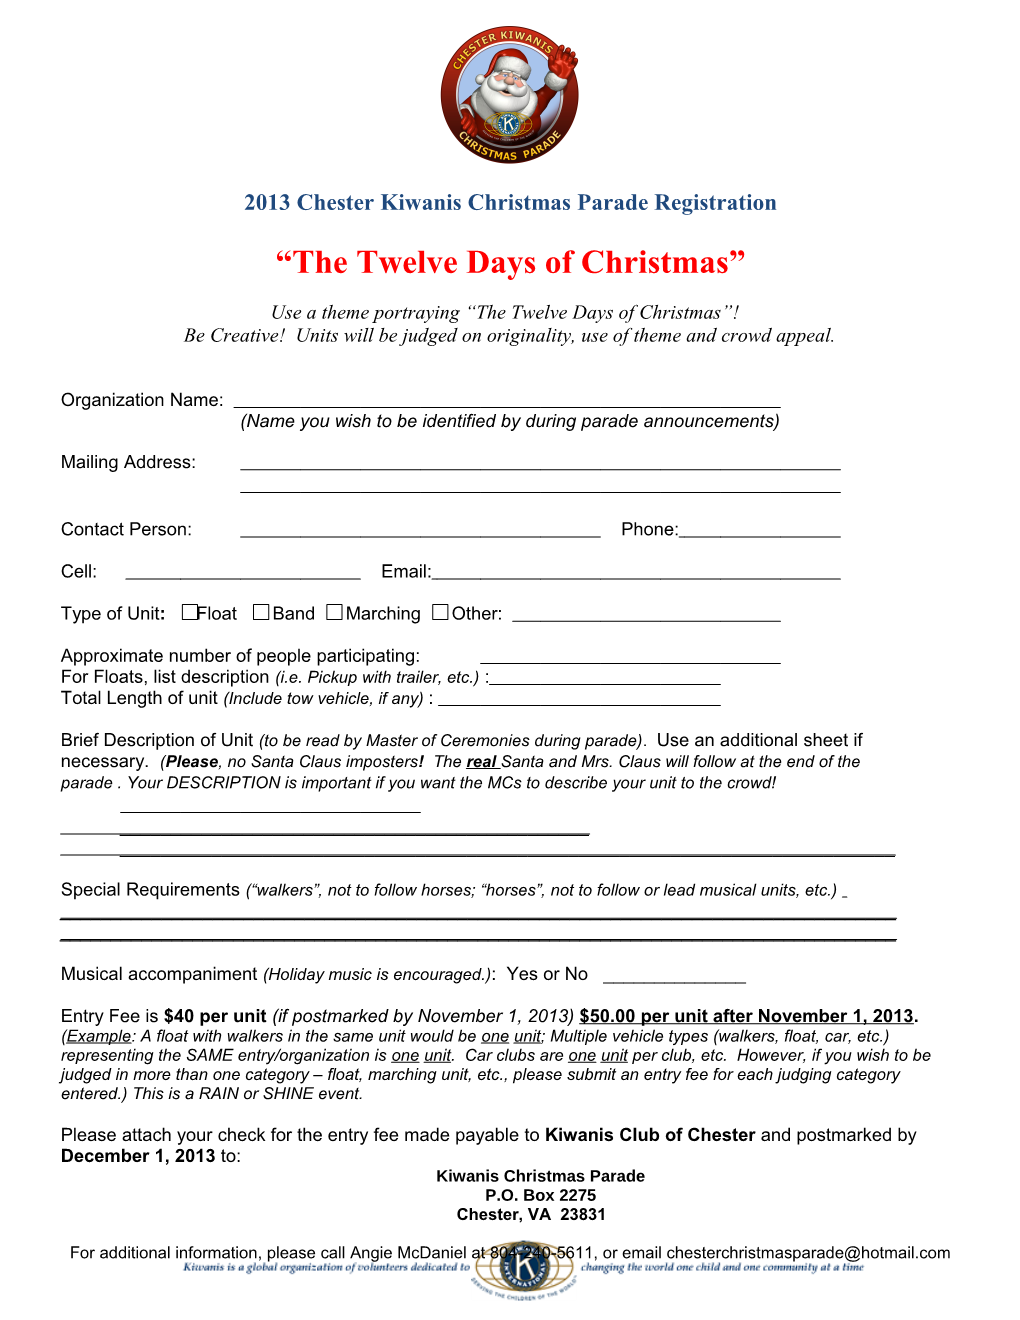 2007 Chester Kiwanis Christmas Parade Registration